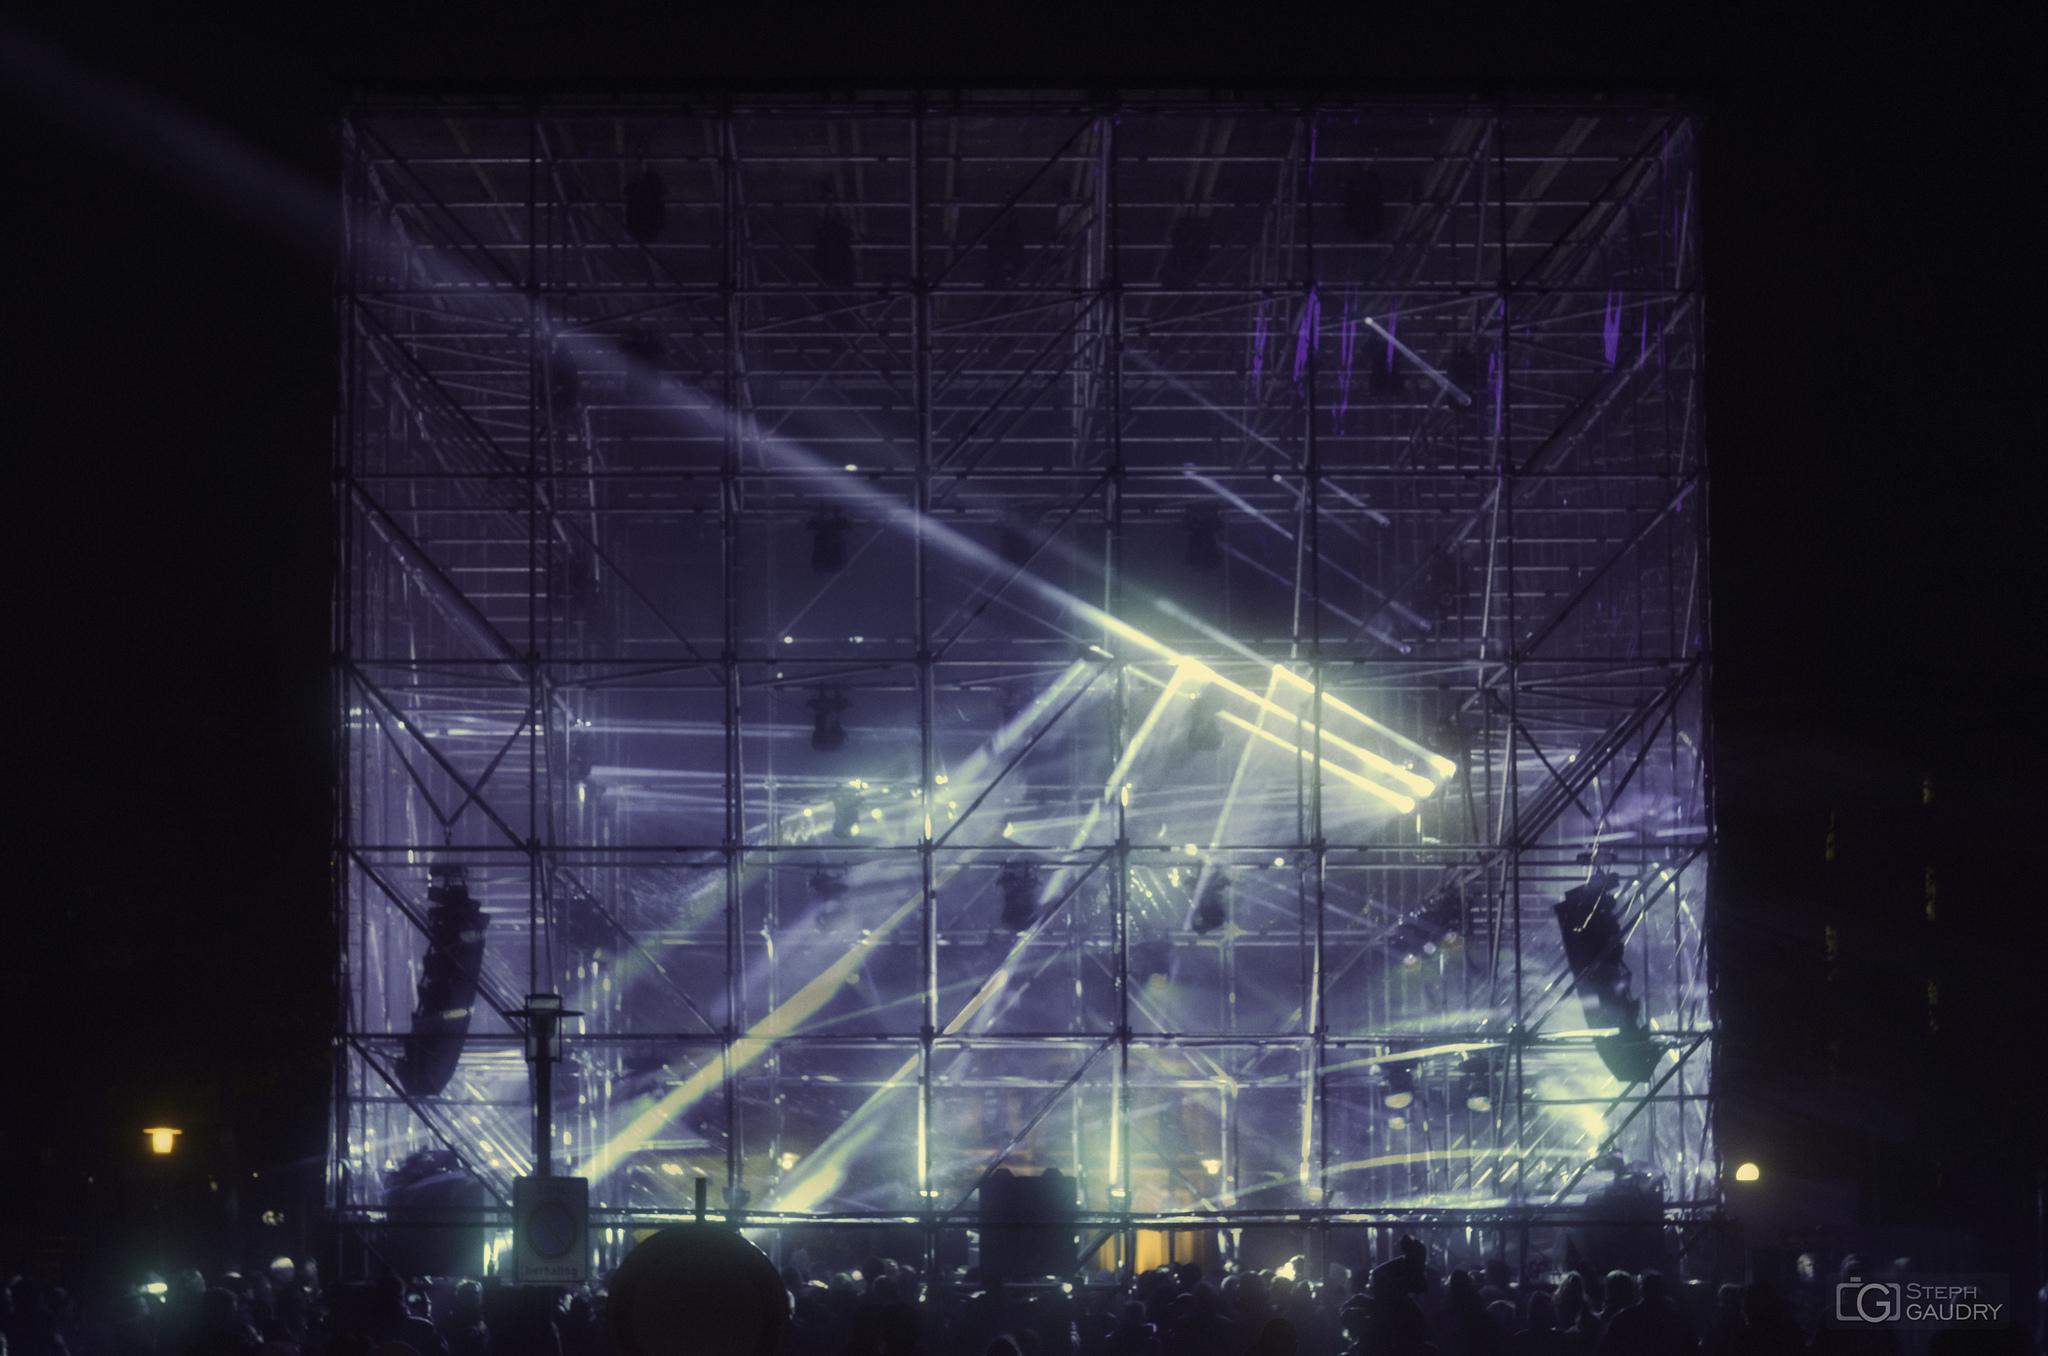 Eindhoven glow 2013 - Tesseract [Click to start slideshow]